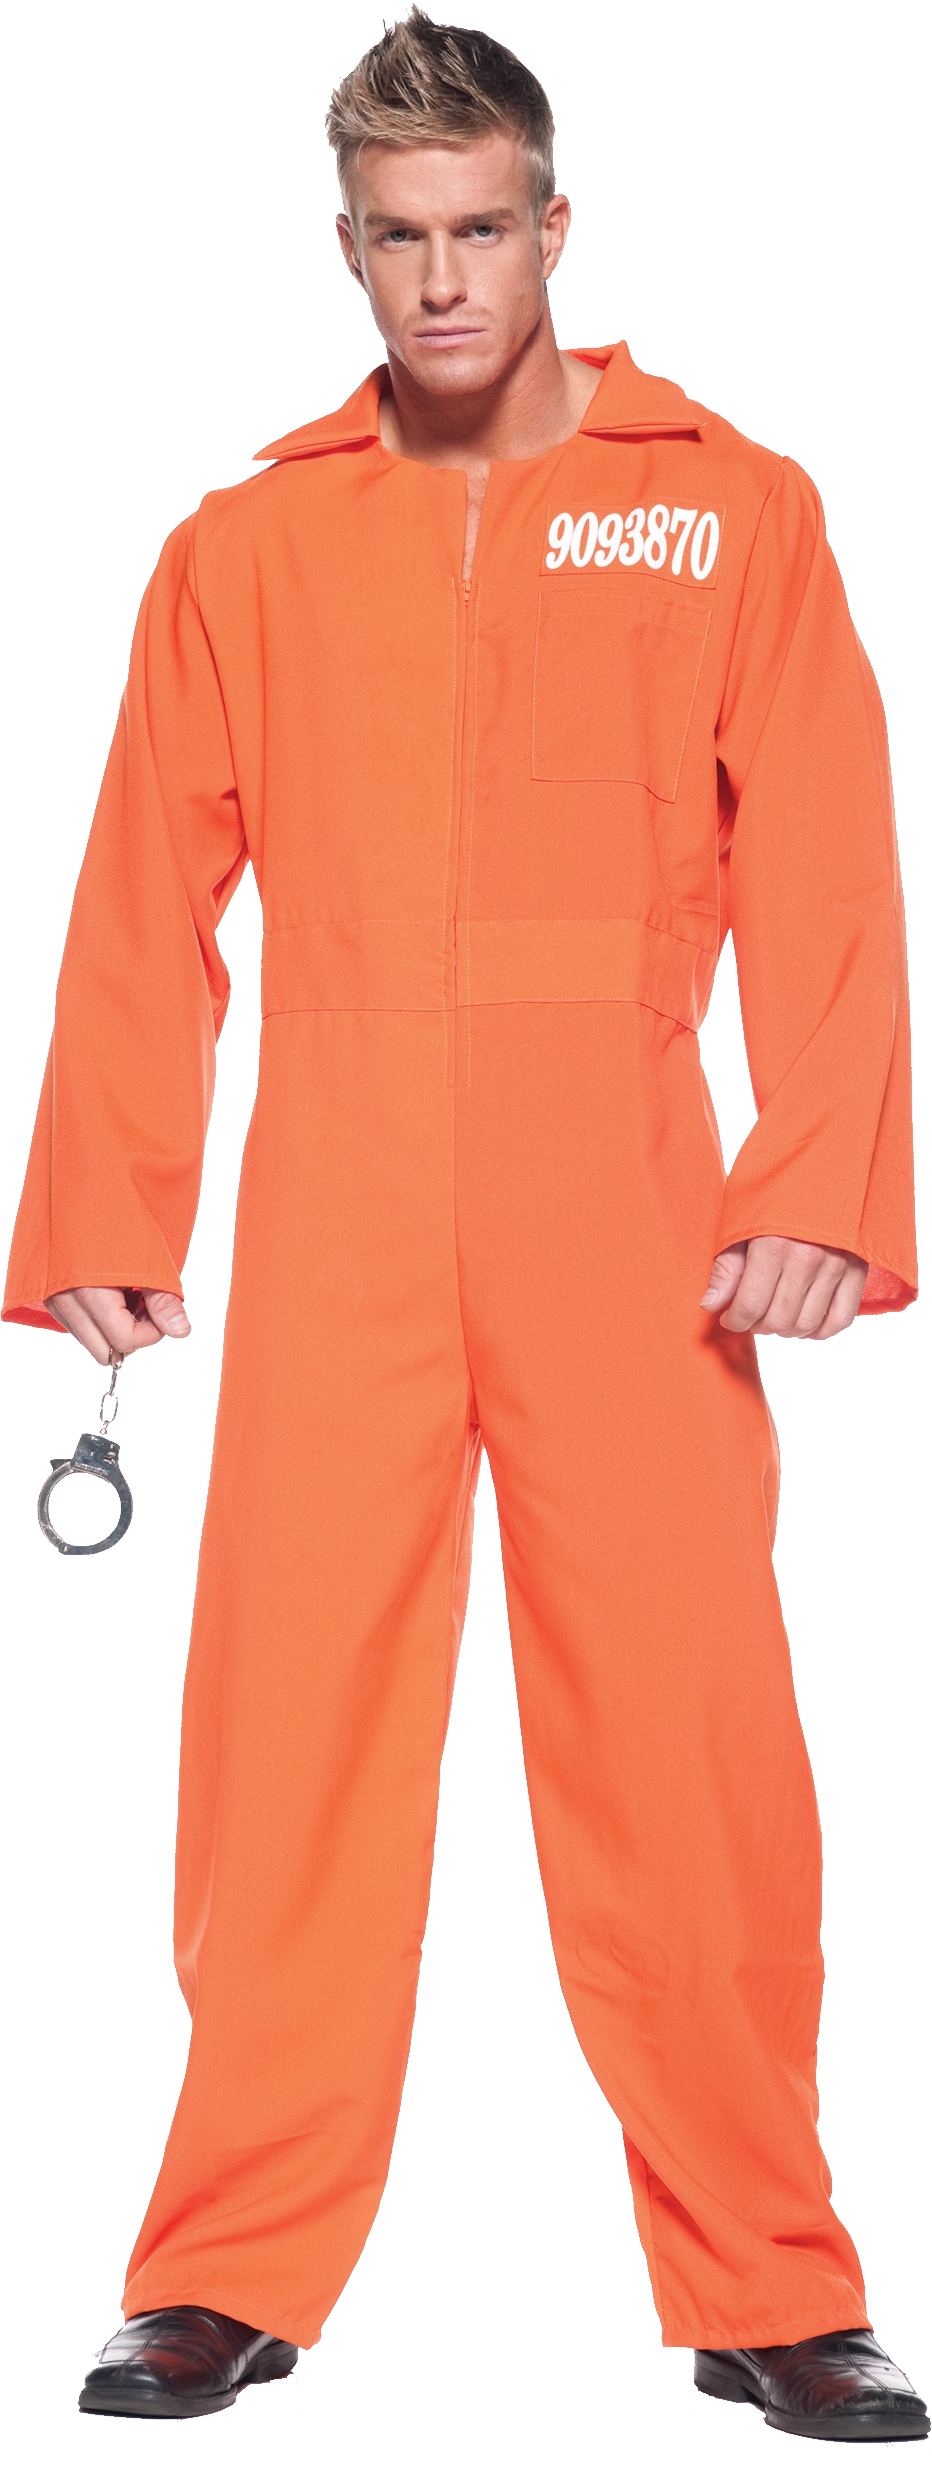 A Man In A Orange Jumpsuit